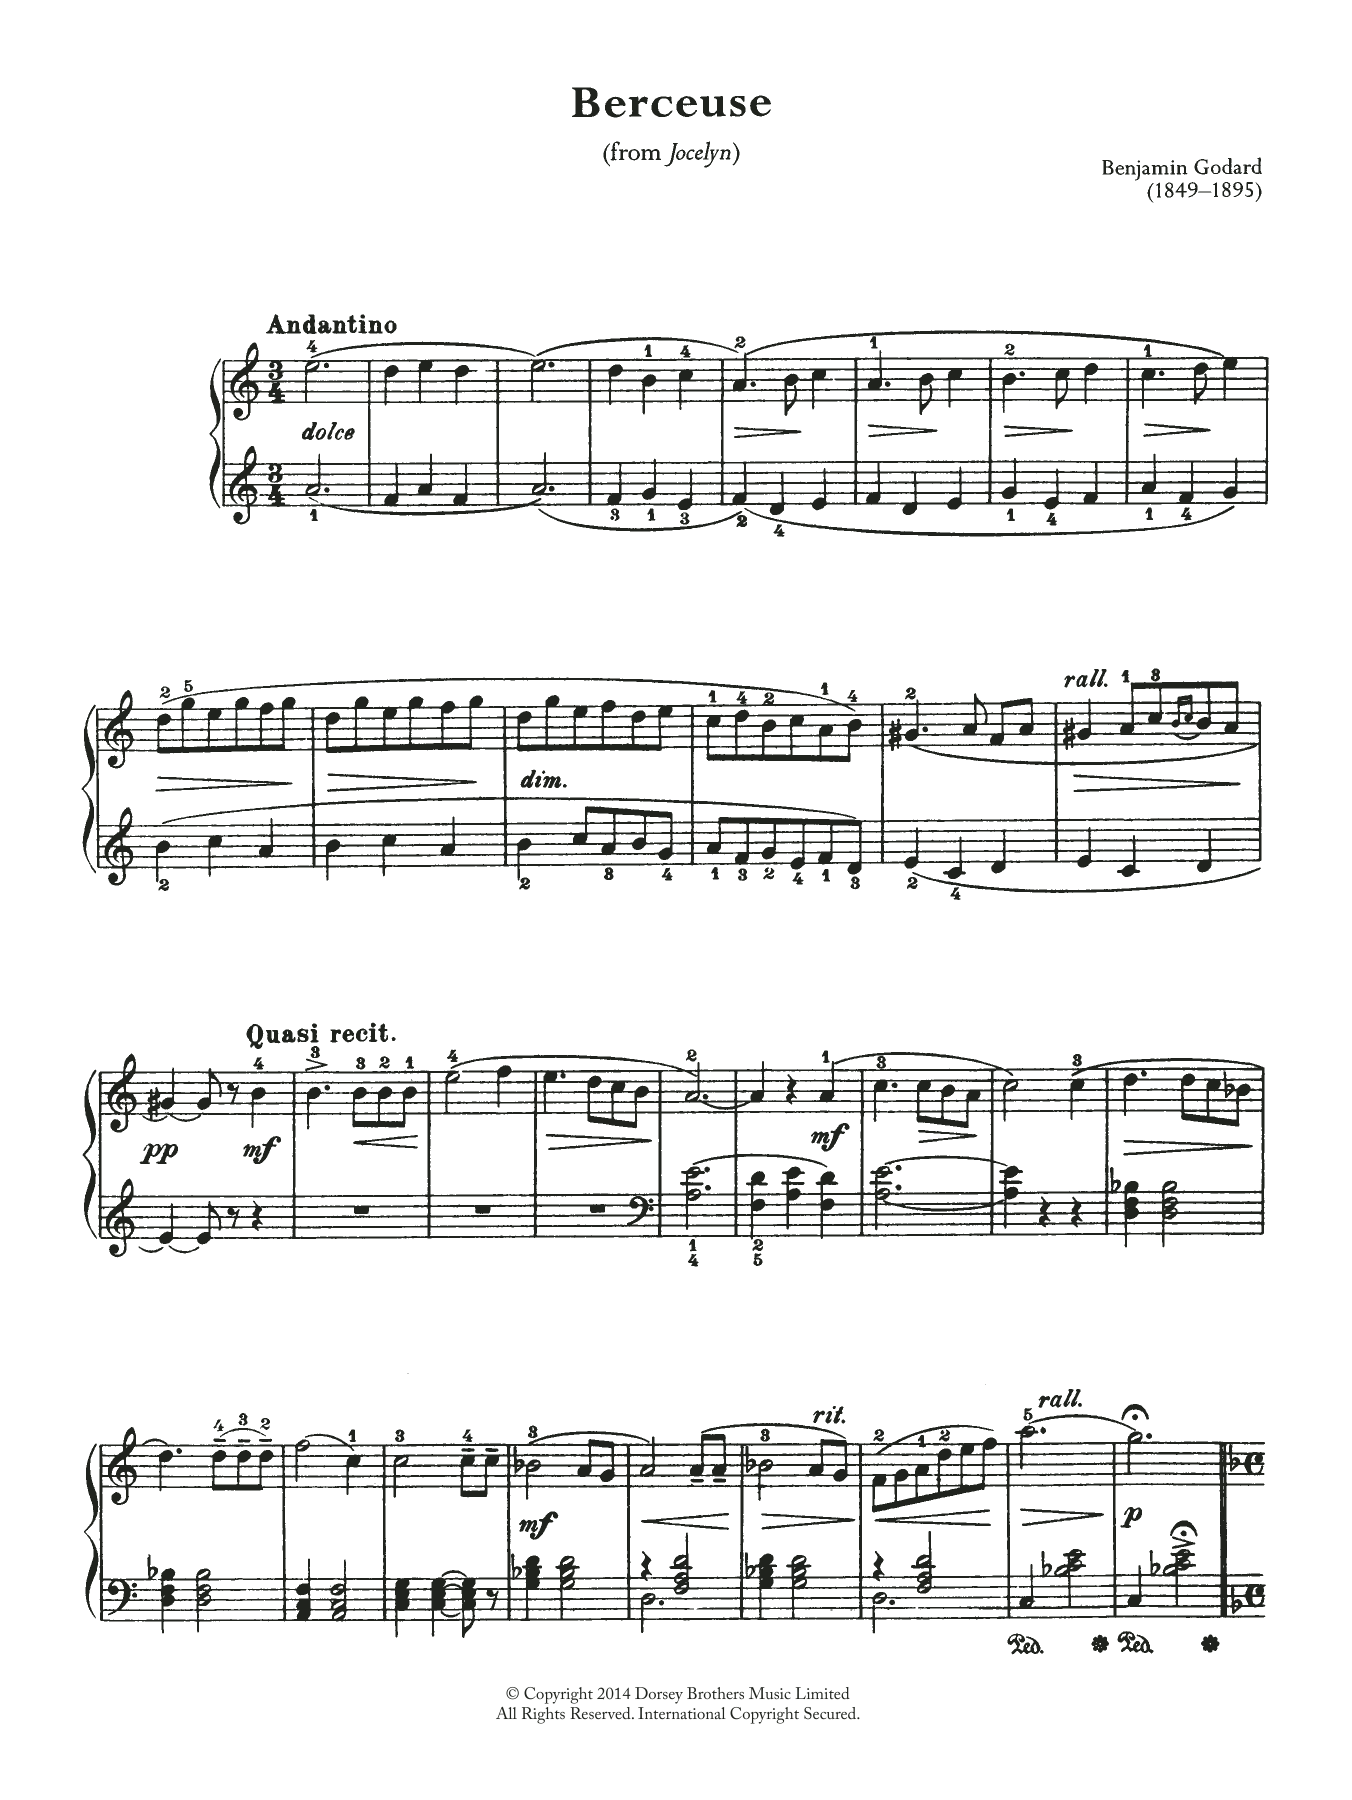 Benjamin Godard Berceuse (From Jocelyn) Sheet Music Notes & Chords for Cello - Download or Print PDF